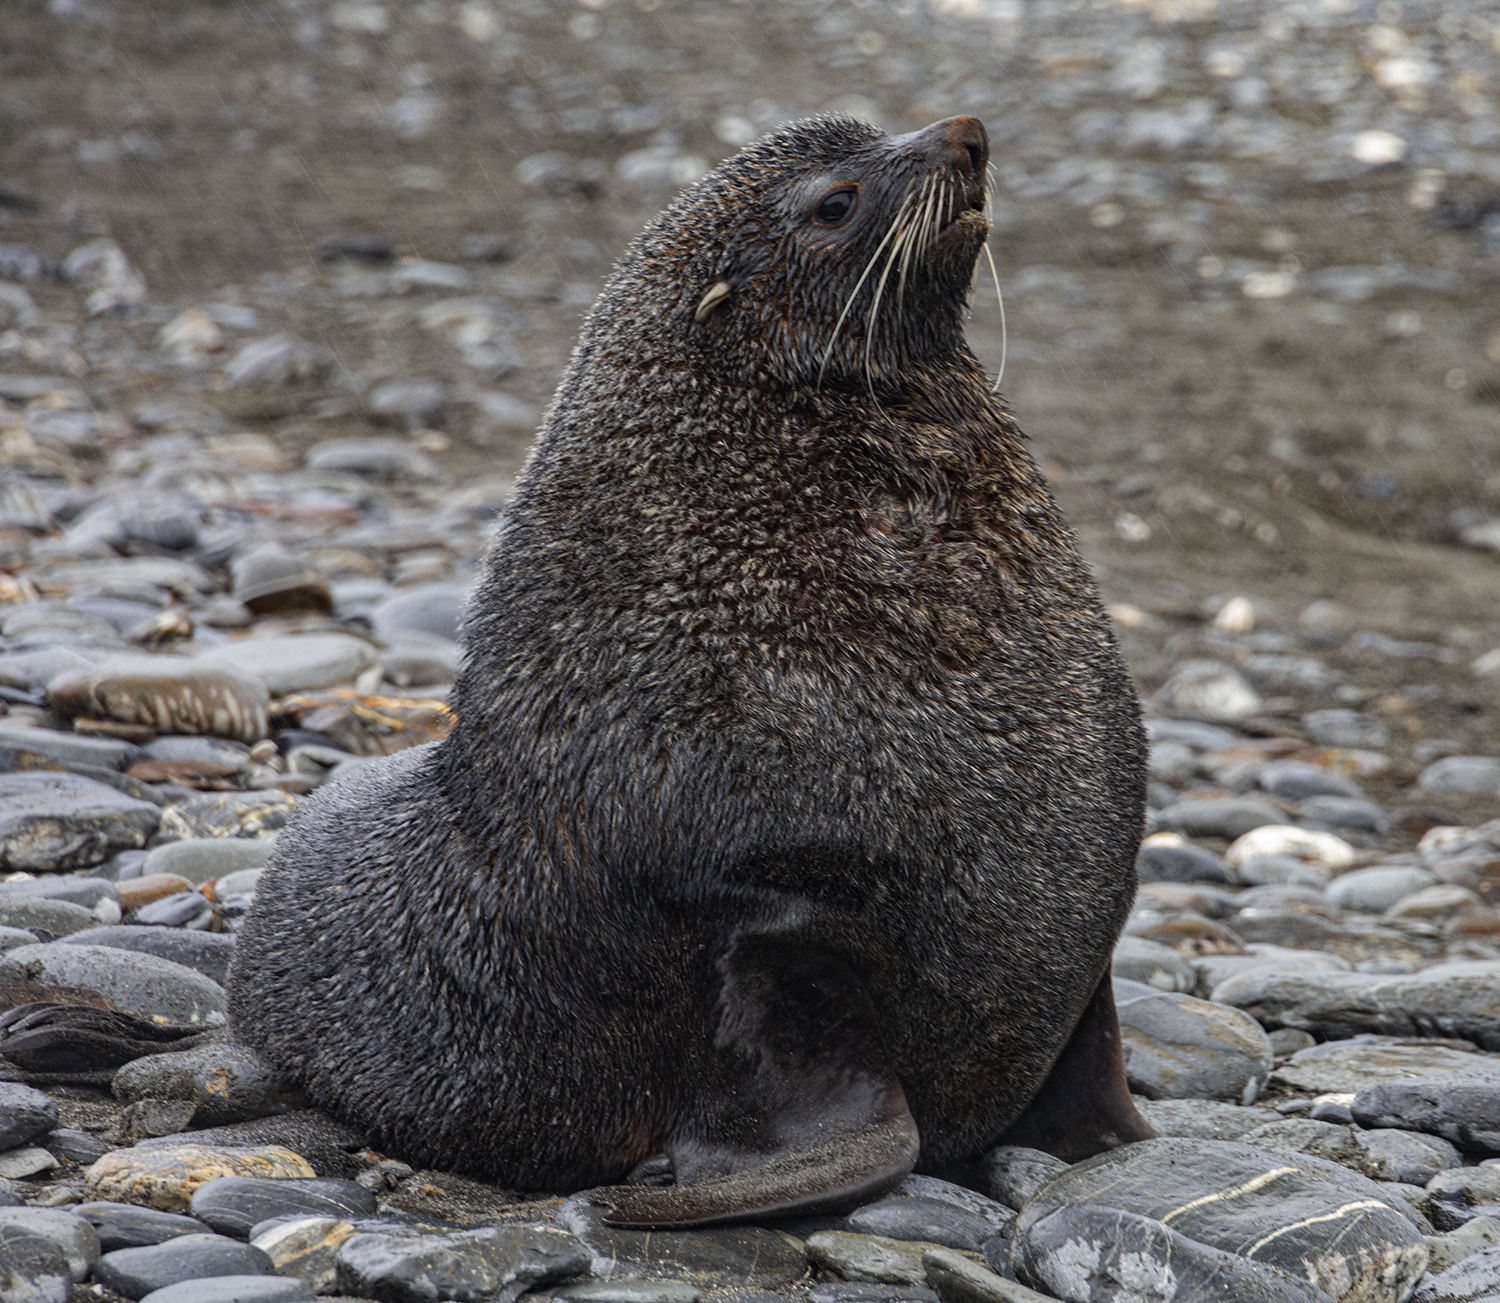 Fur seal. Image: Toni Younghusband